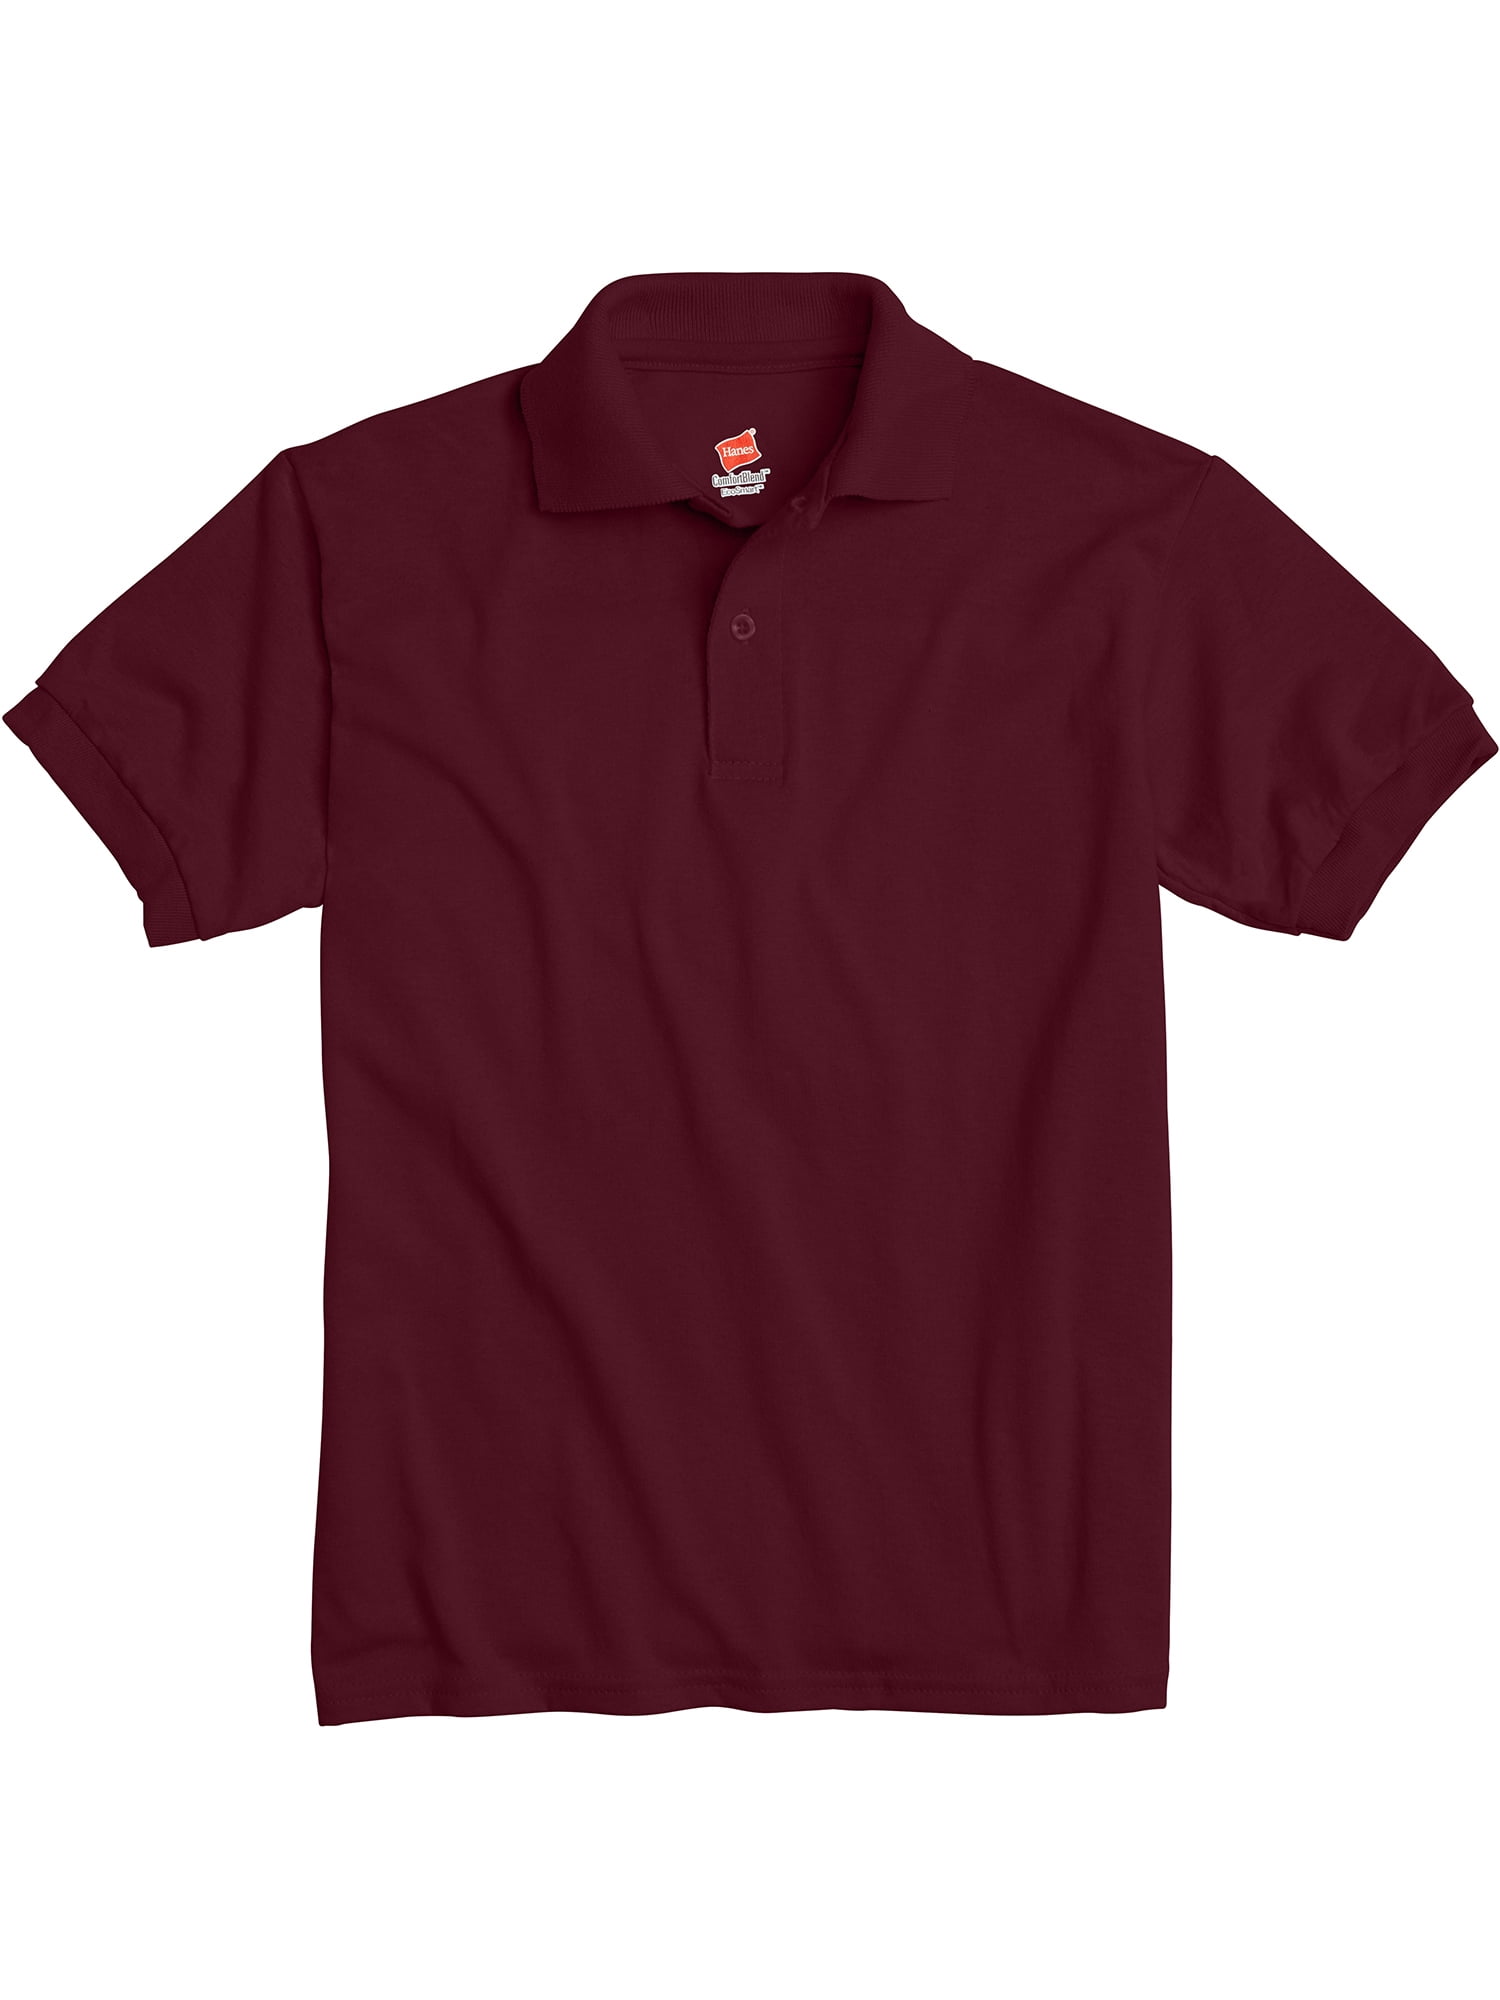 Hanes - Hanes Boys School Uniform 4-18 EcoSmart Jersey Polo Shirt -  Walmart.com - Walmart.com